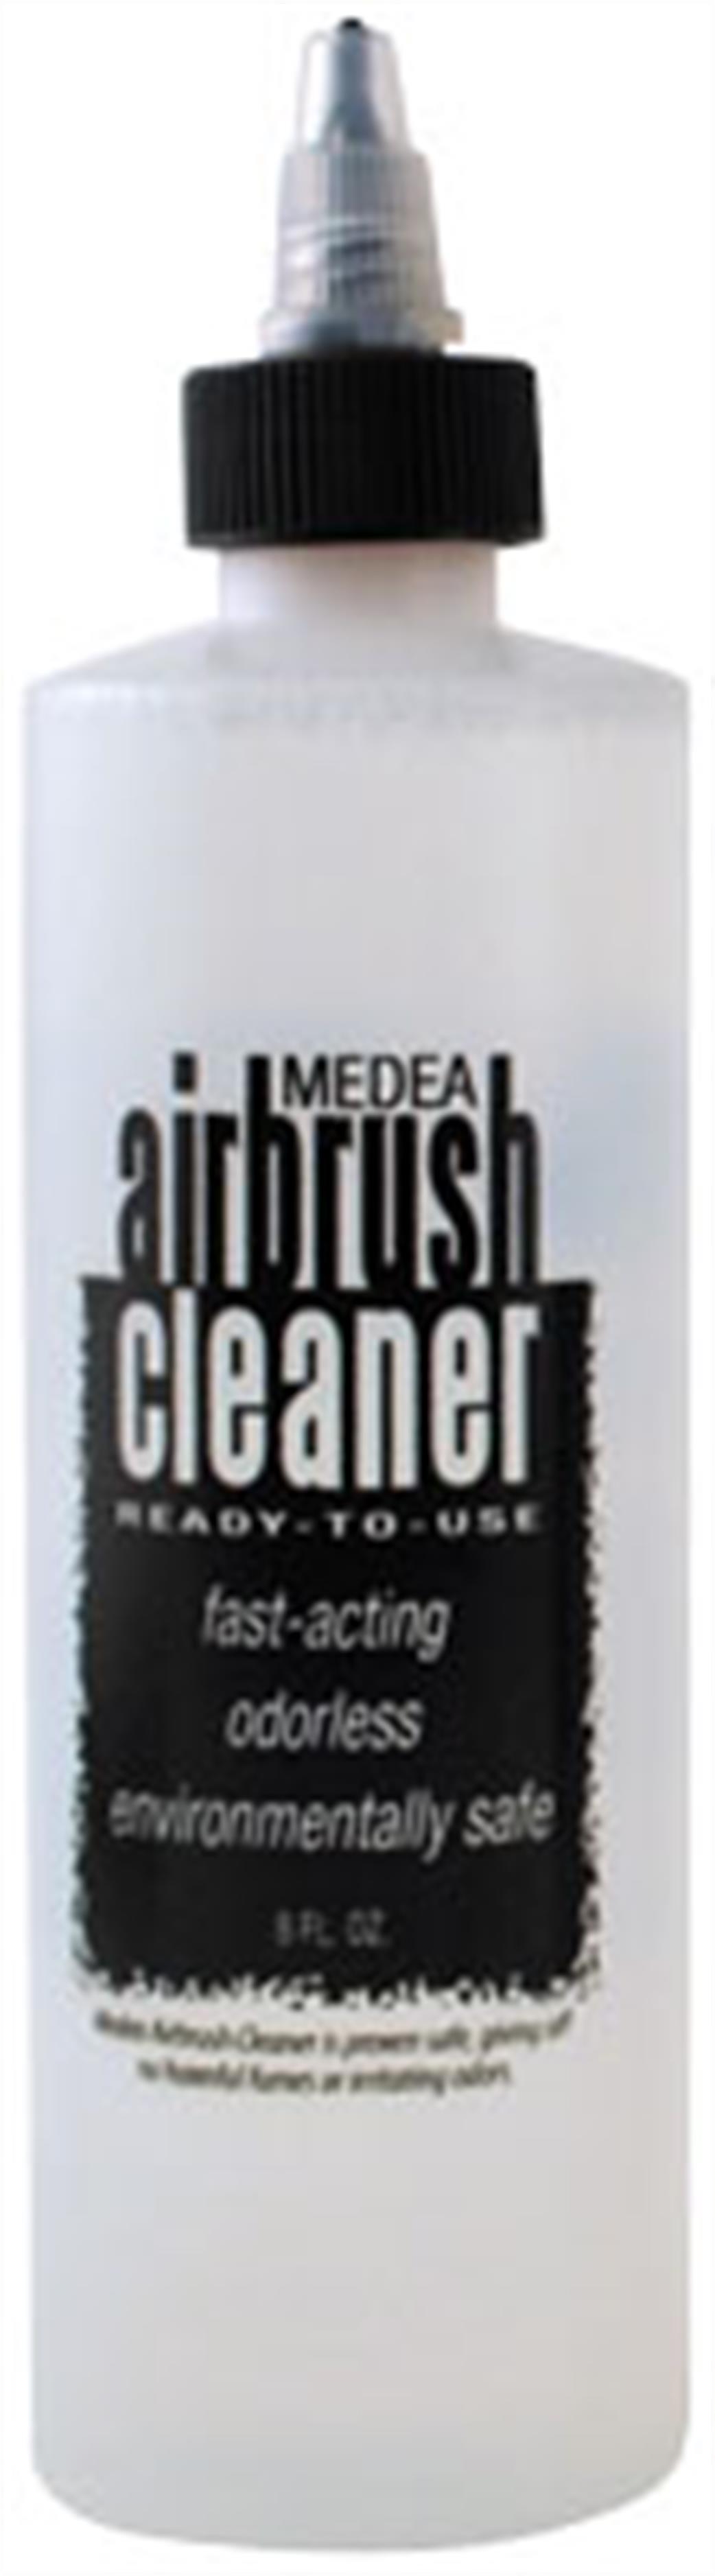 Medea  6 500 08 Acrylic Airbrush Cleaner 8oz 236ml Botlle